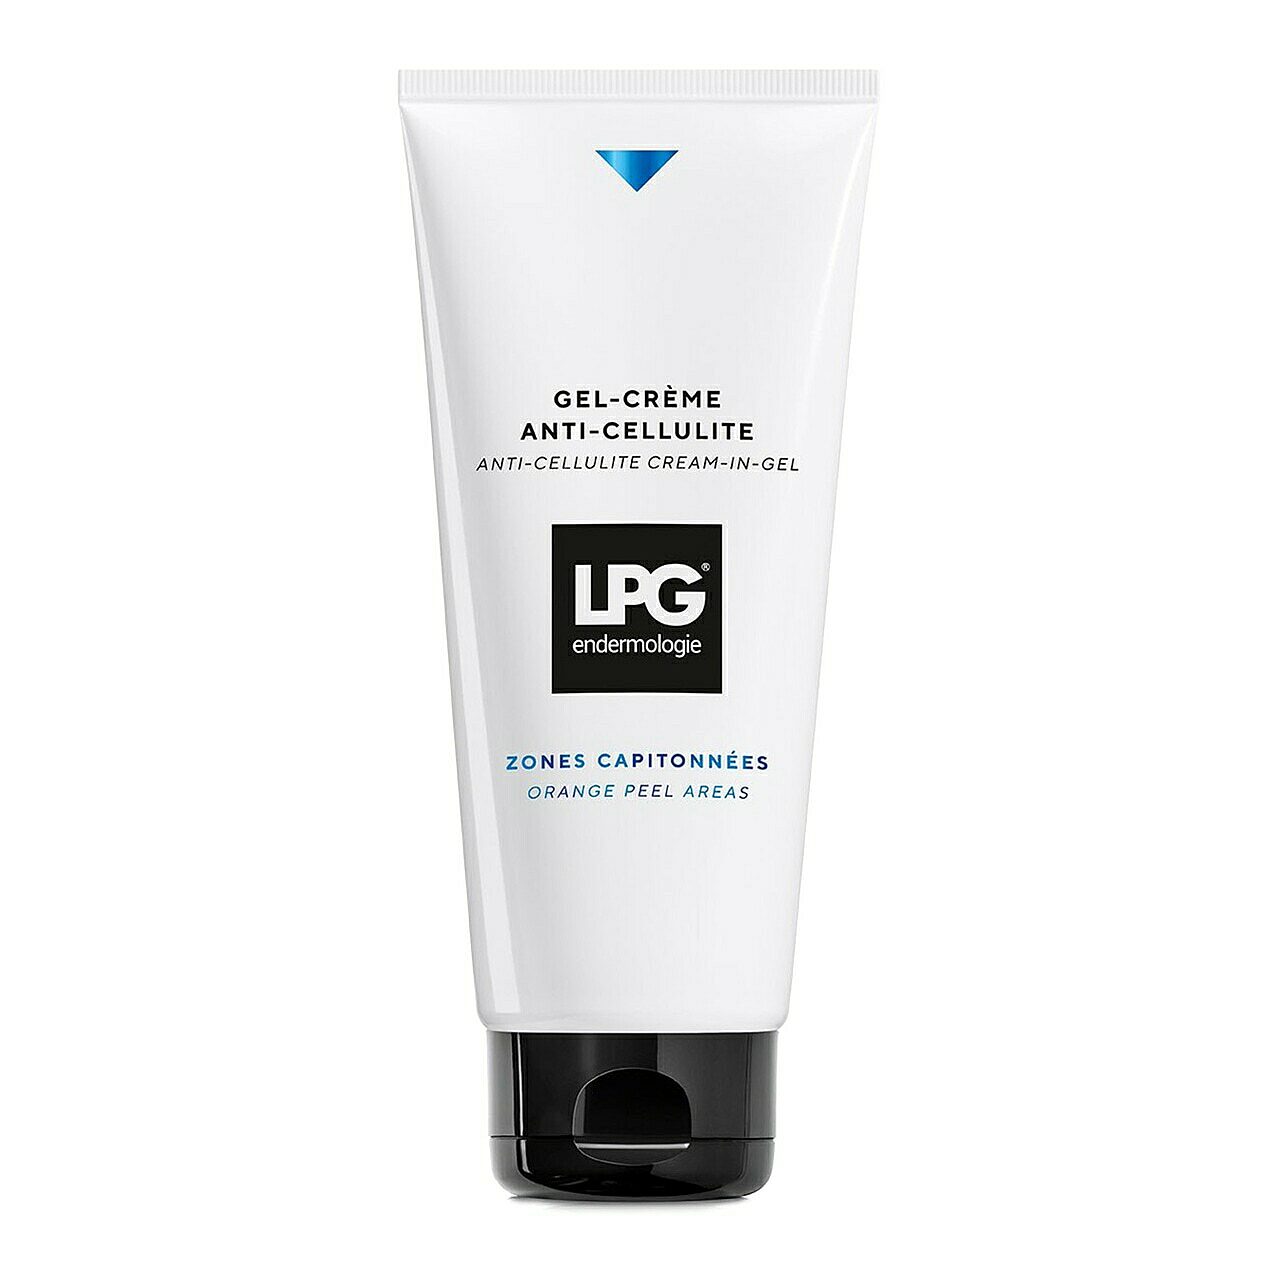 LPG Endermologie Anti-Cellulite Cream-In-Gel, 200ml